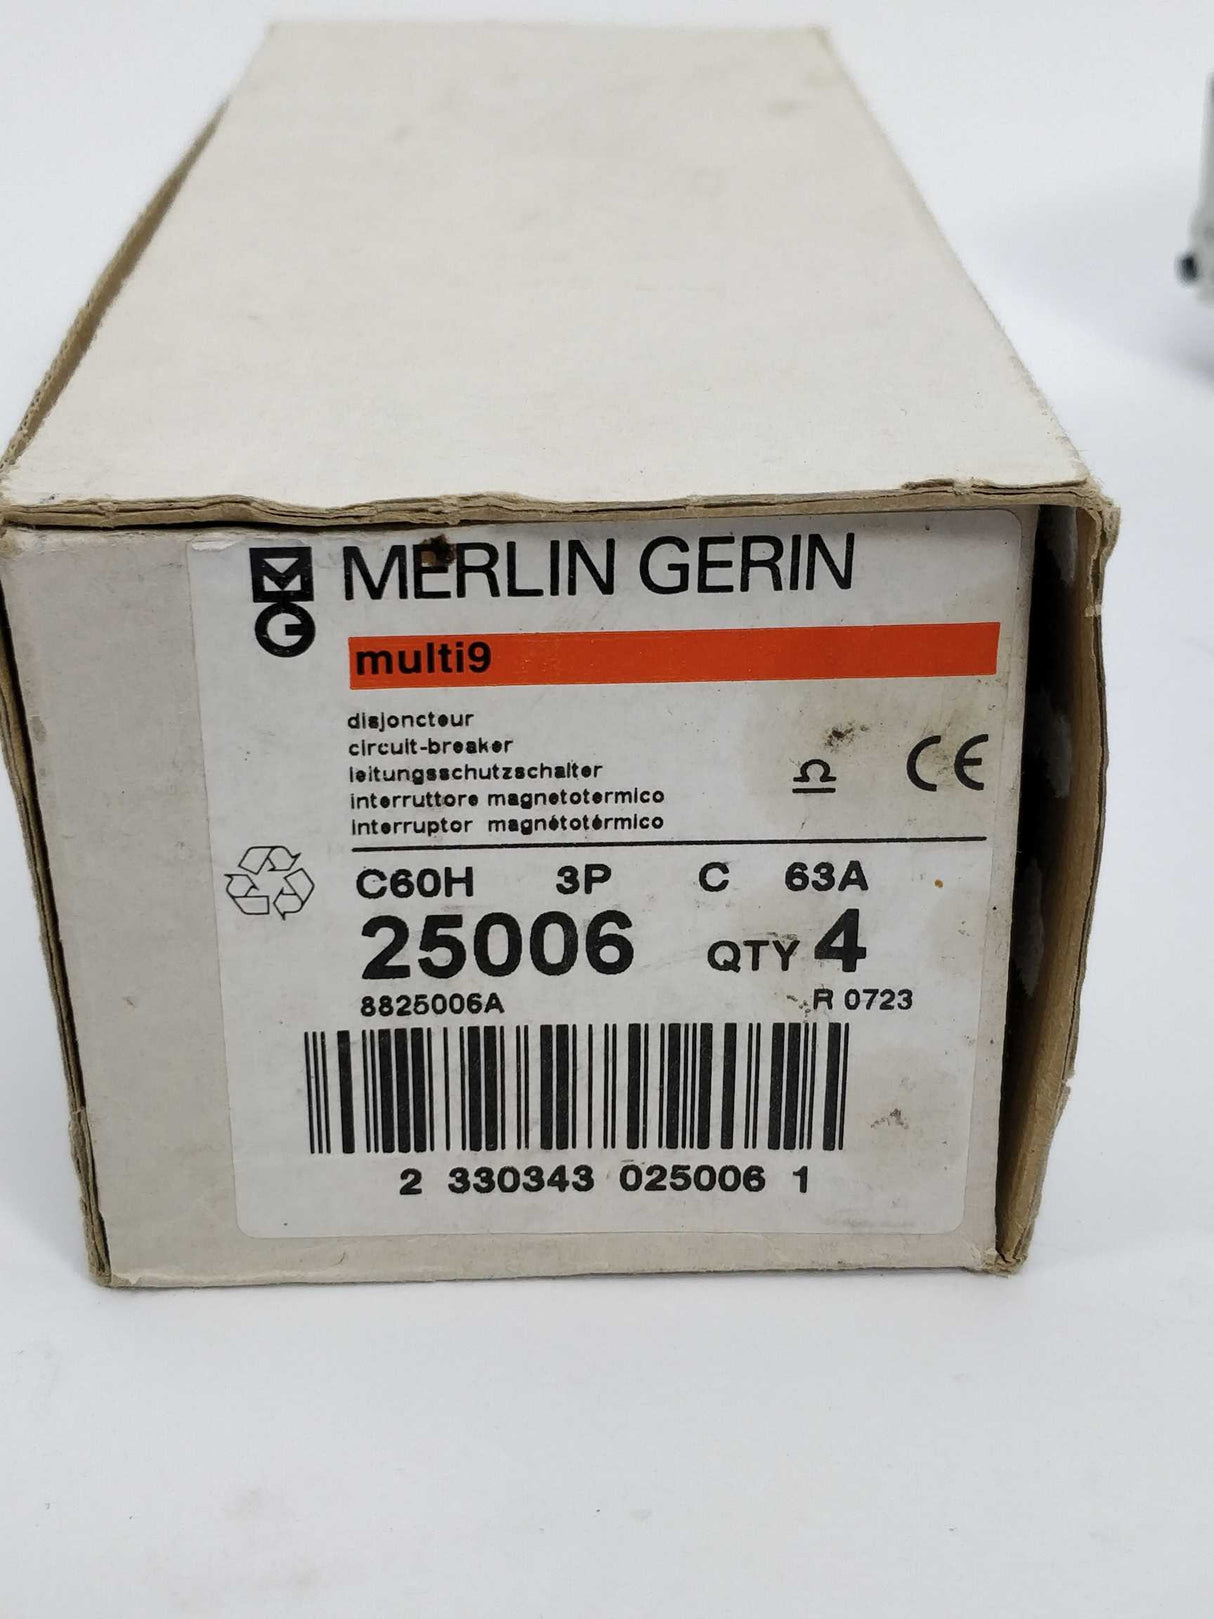 Merlin Gerin 25006 C60H 3P C 63A multi9 circuit breaker